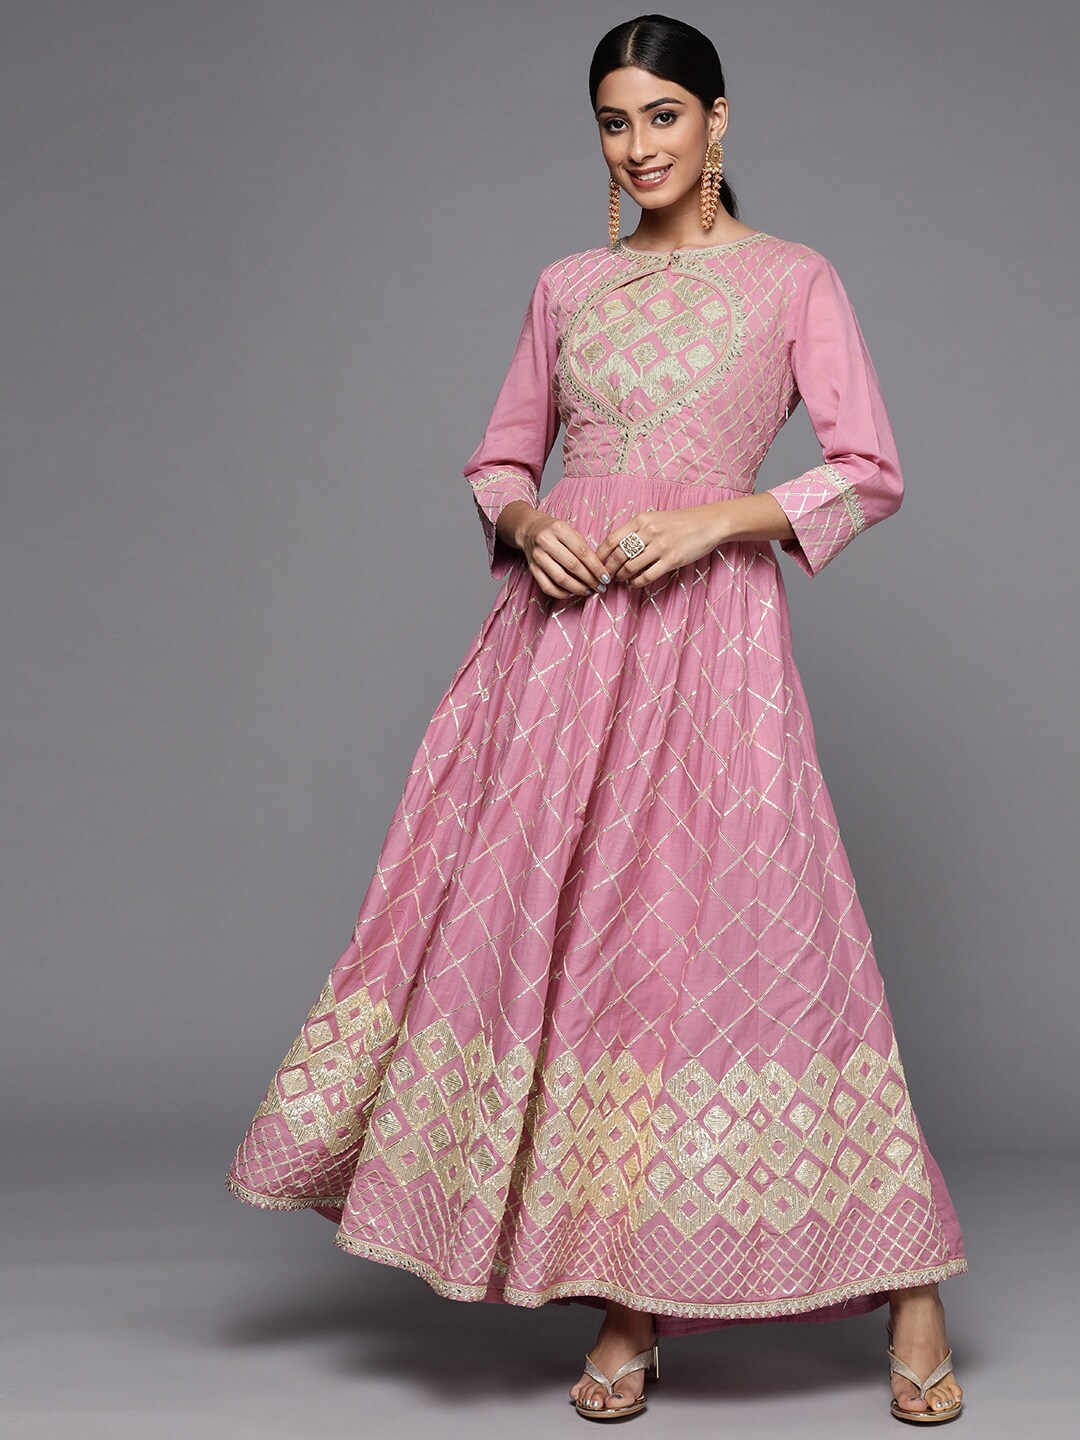 Varanga Pink & Golden Ethnic Motifs Embroidered Ethnic Maxi Dress Price in India